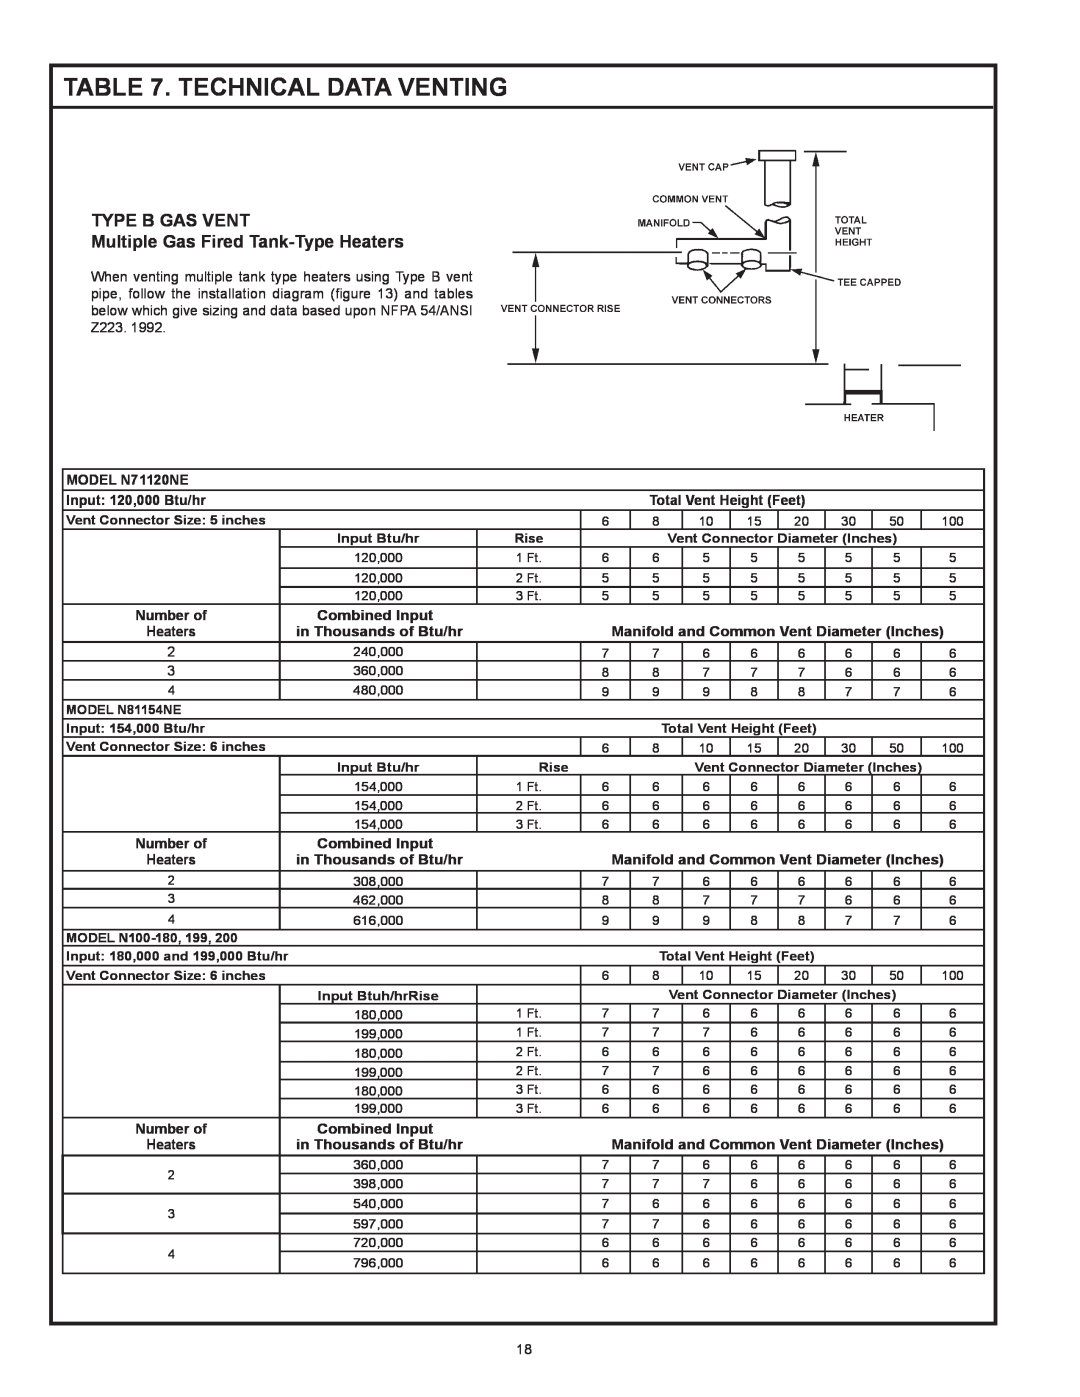 Reliance Water Heaters N85390NE, N71120NE Technical Data Venting, Type B Gas Vent, Multiple Gas Fired Tank-TypeHeaters 